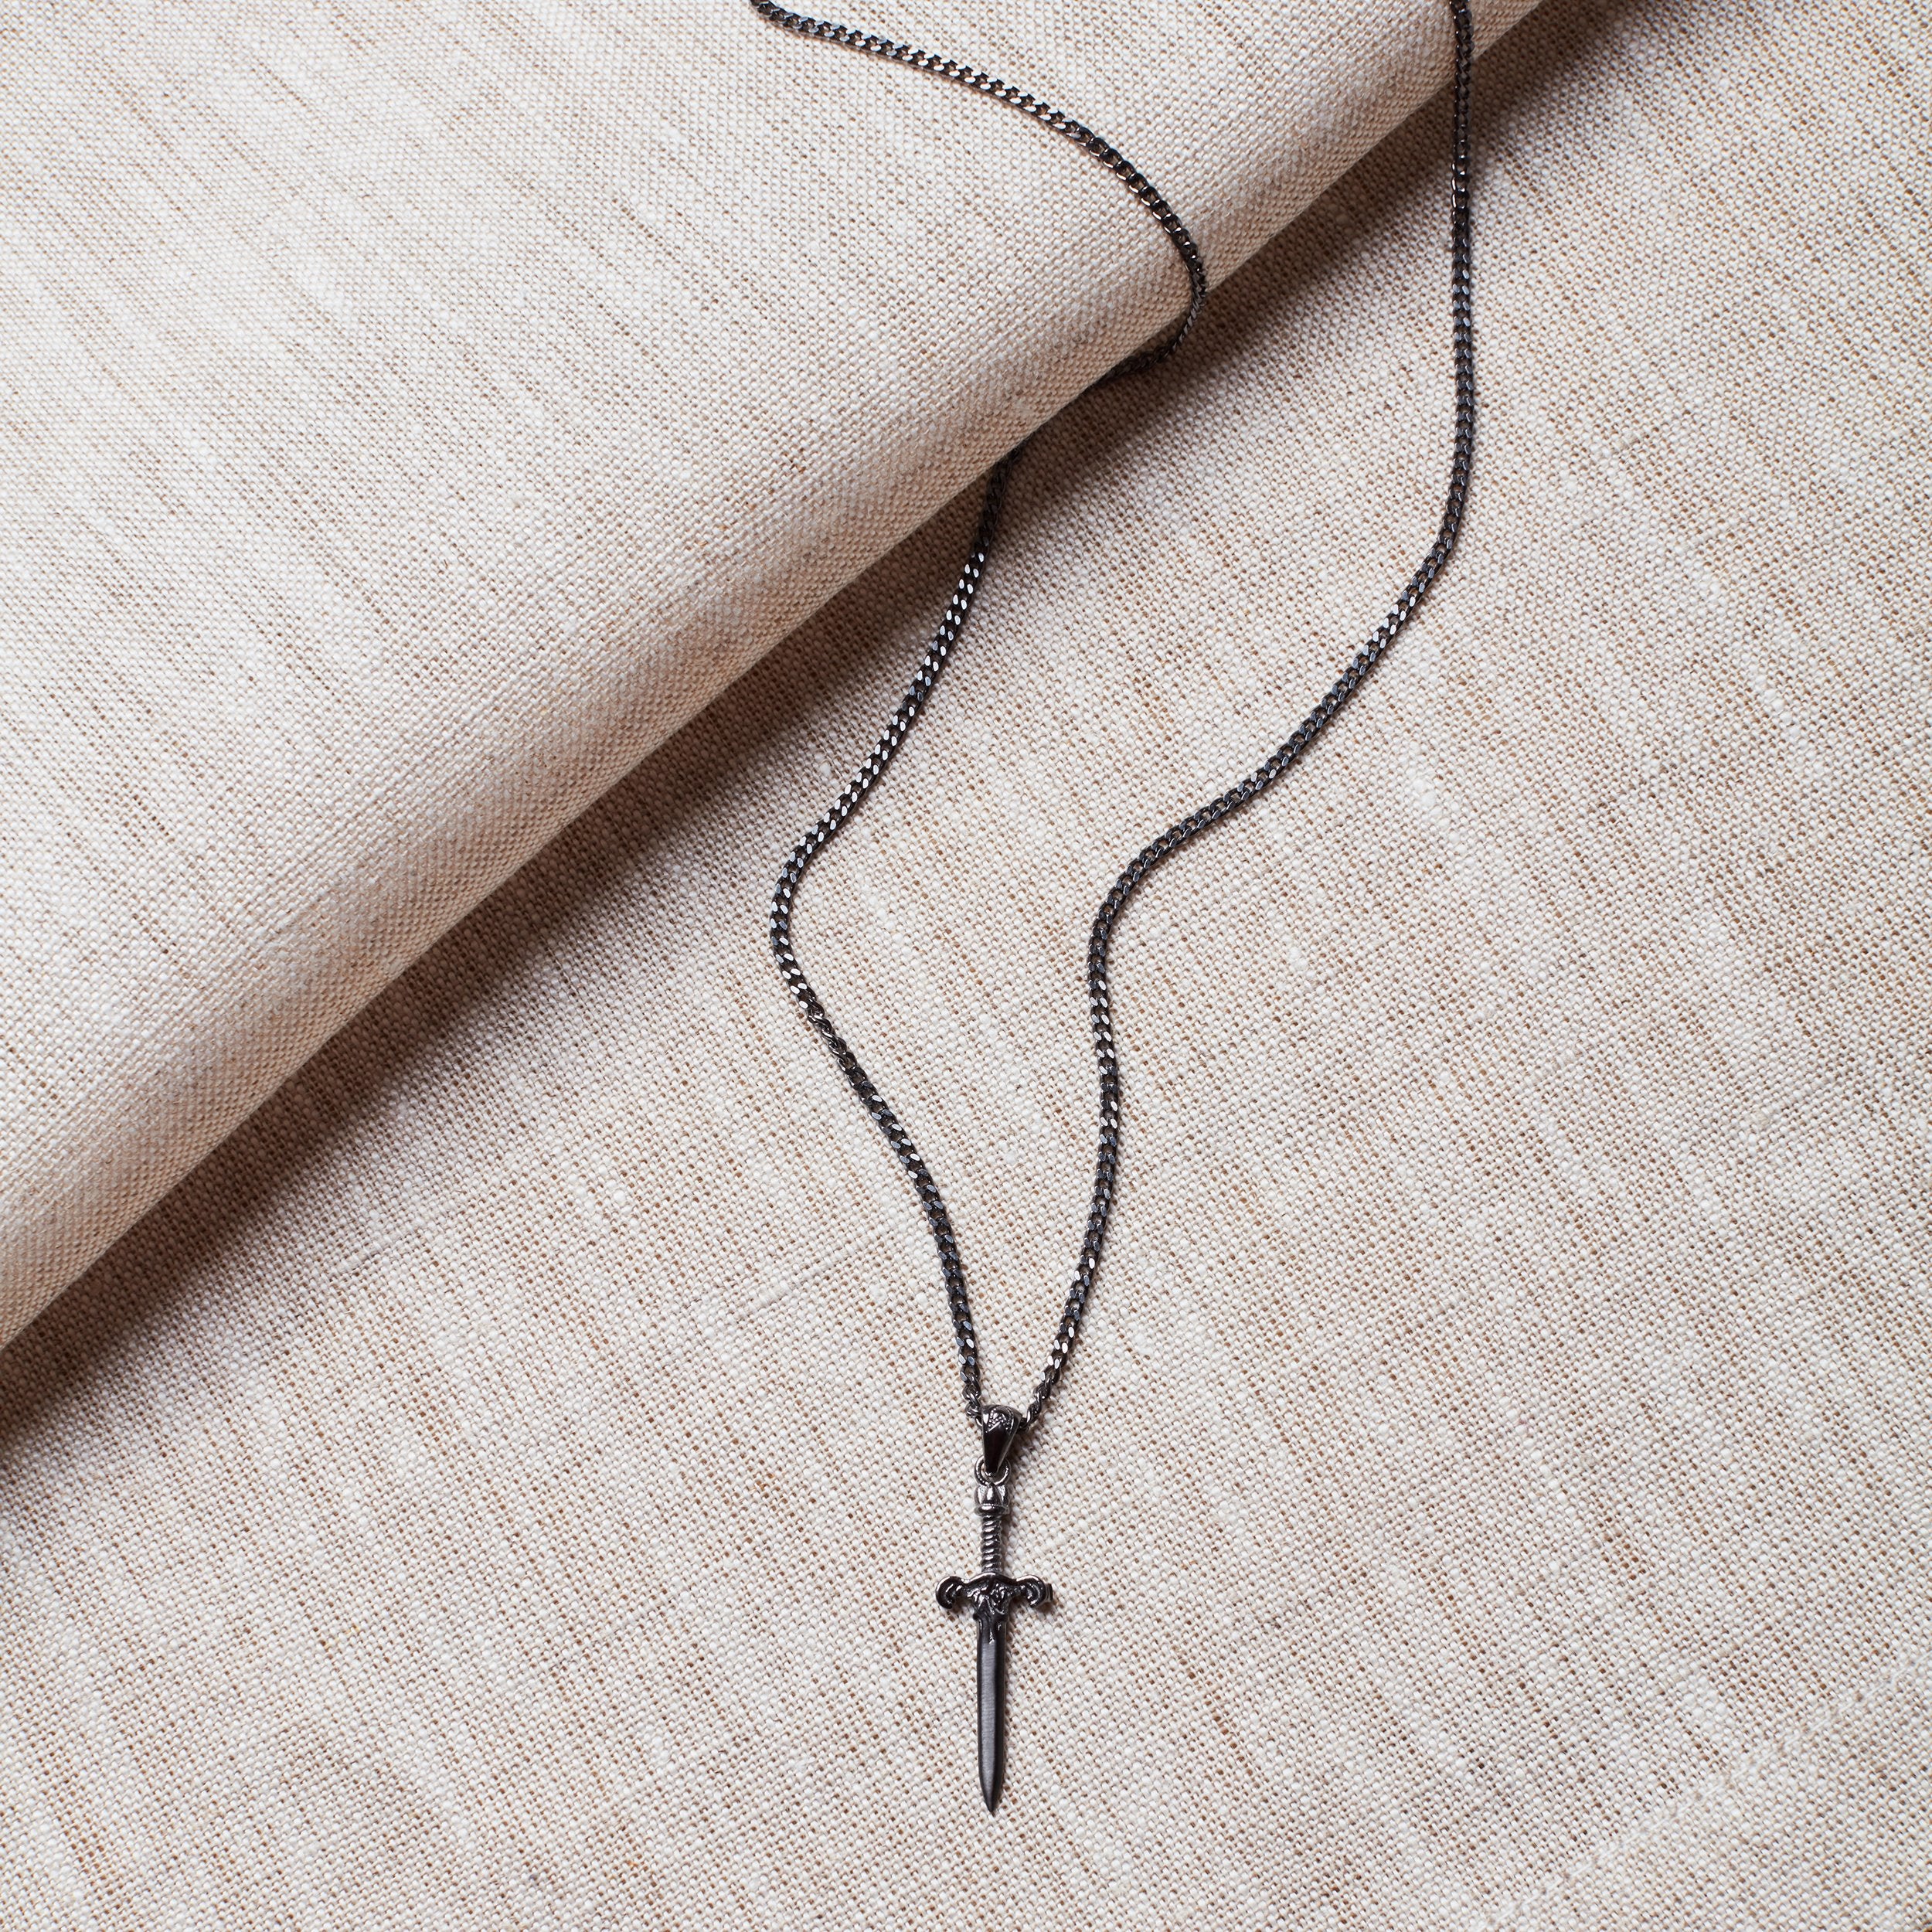 Sword Gun Metal Necklace for Men 